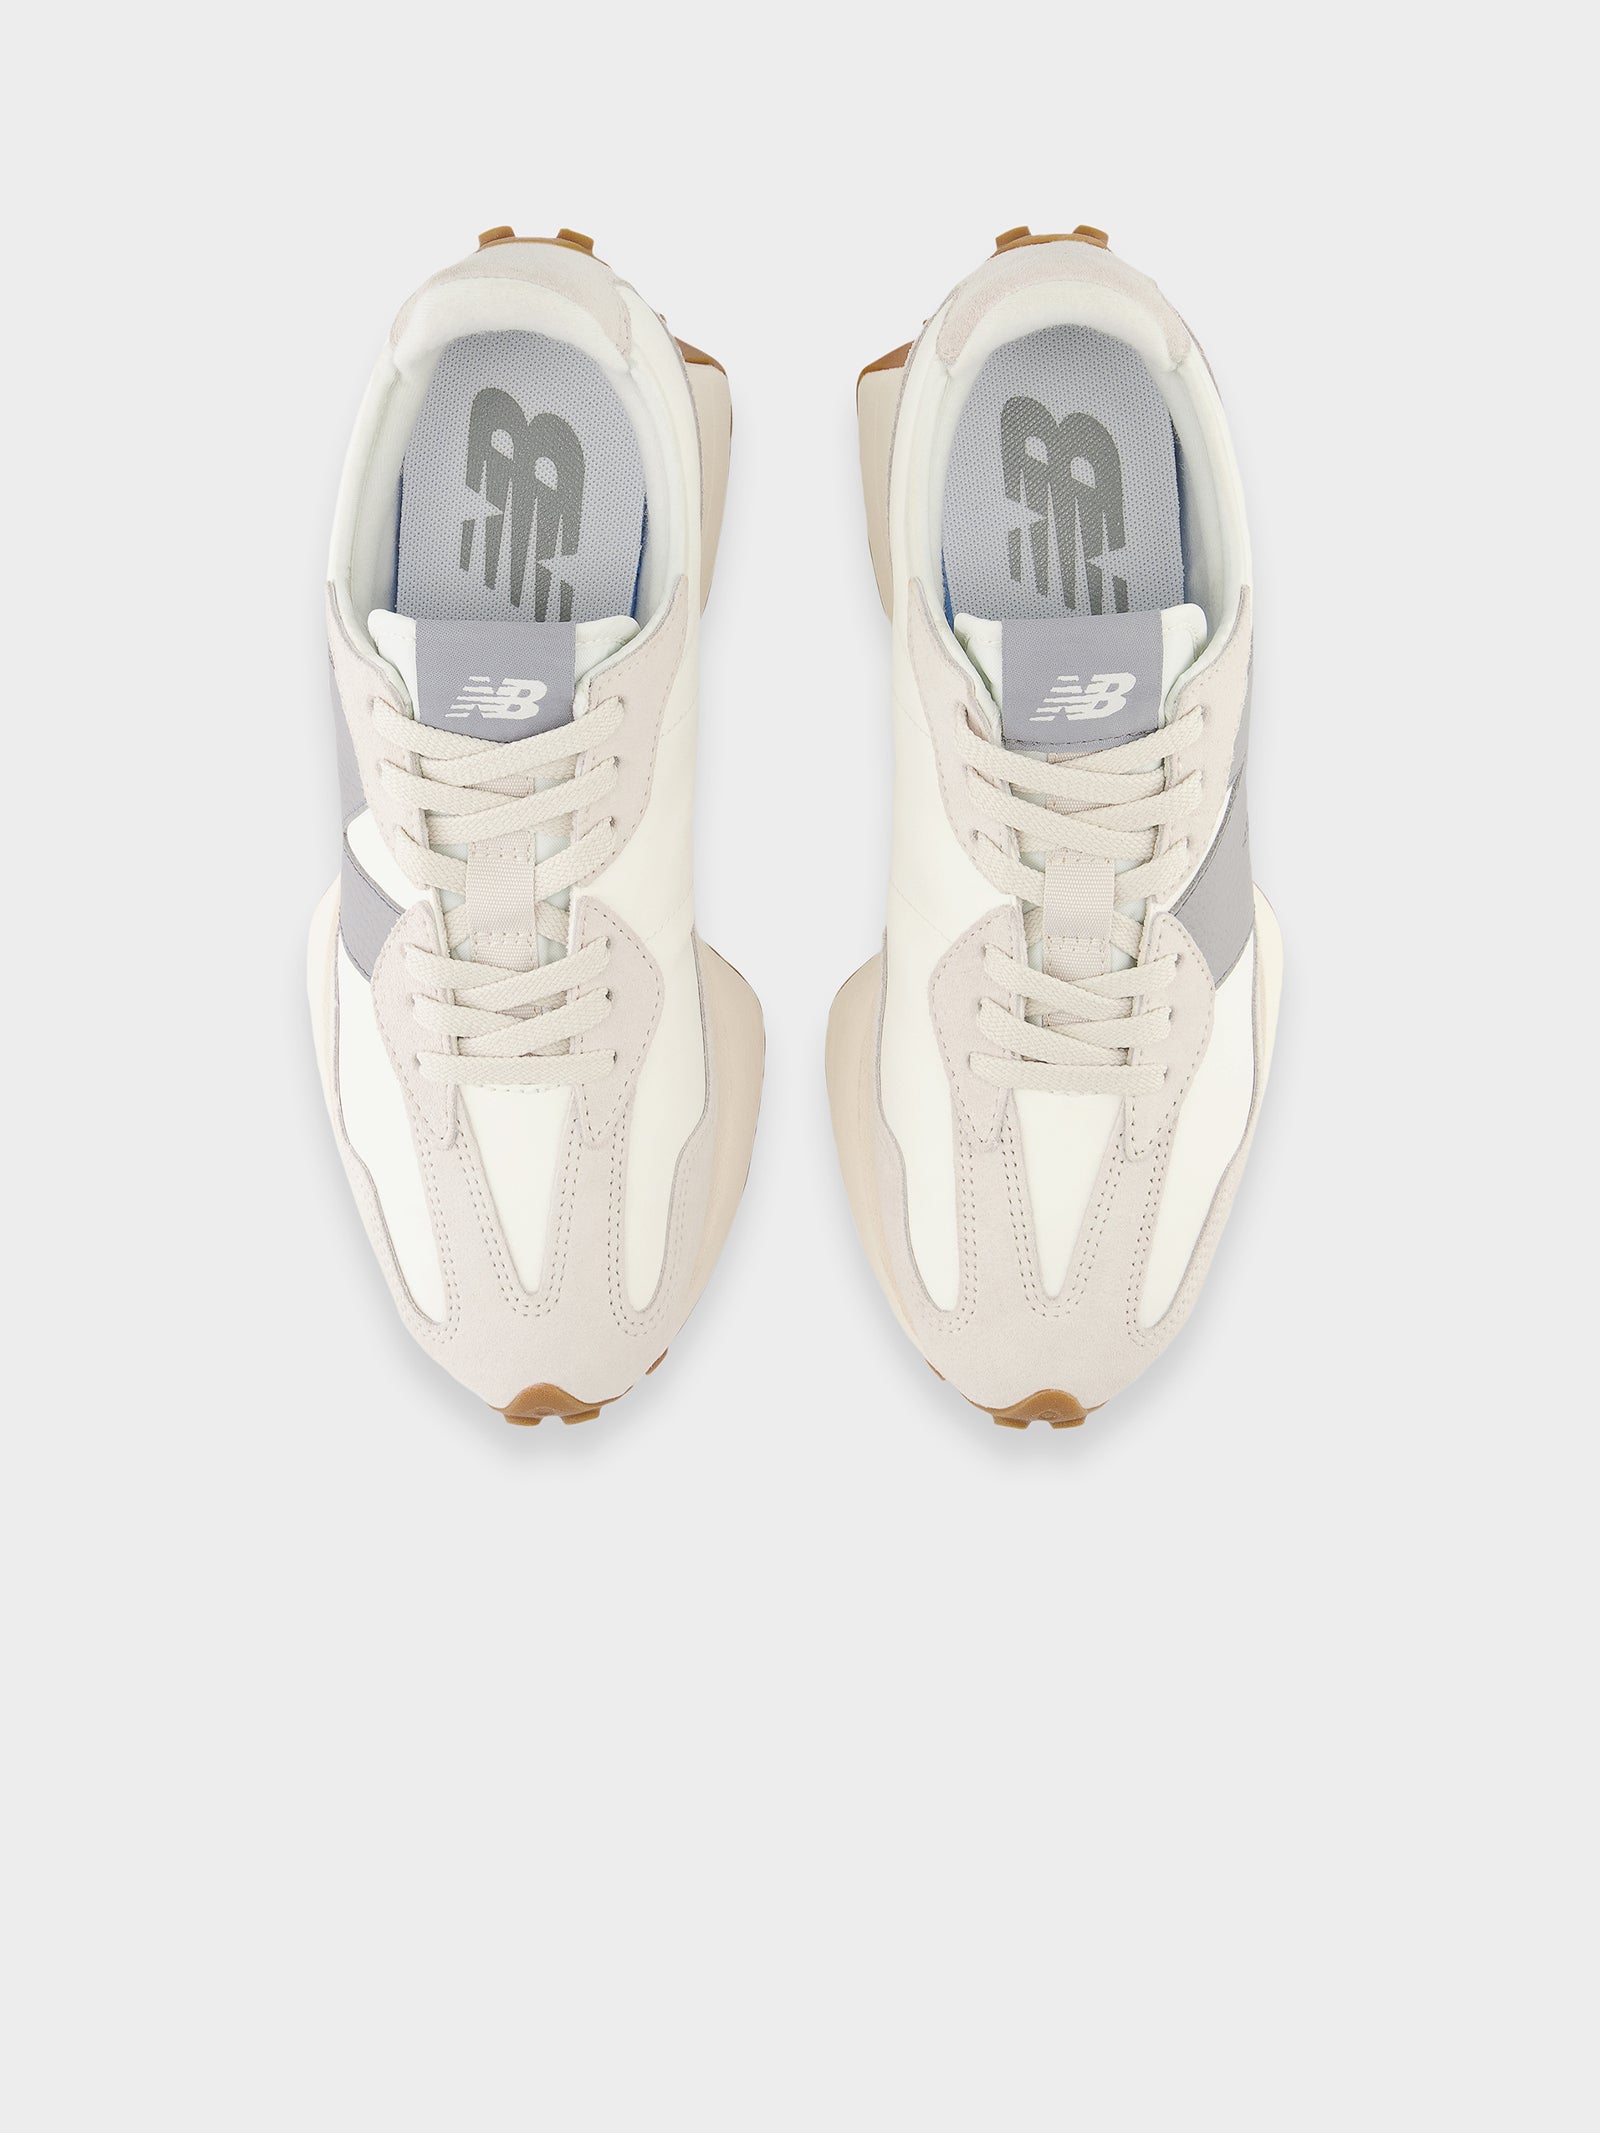 Unisex 327 Sneakers in Grey & White